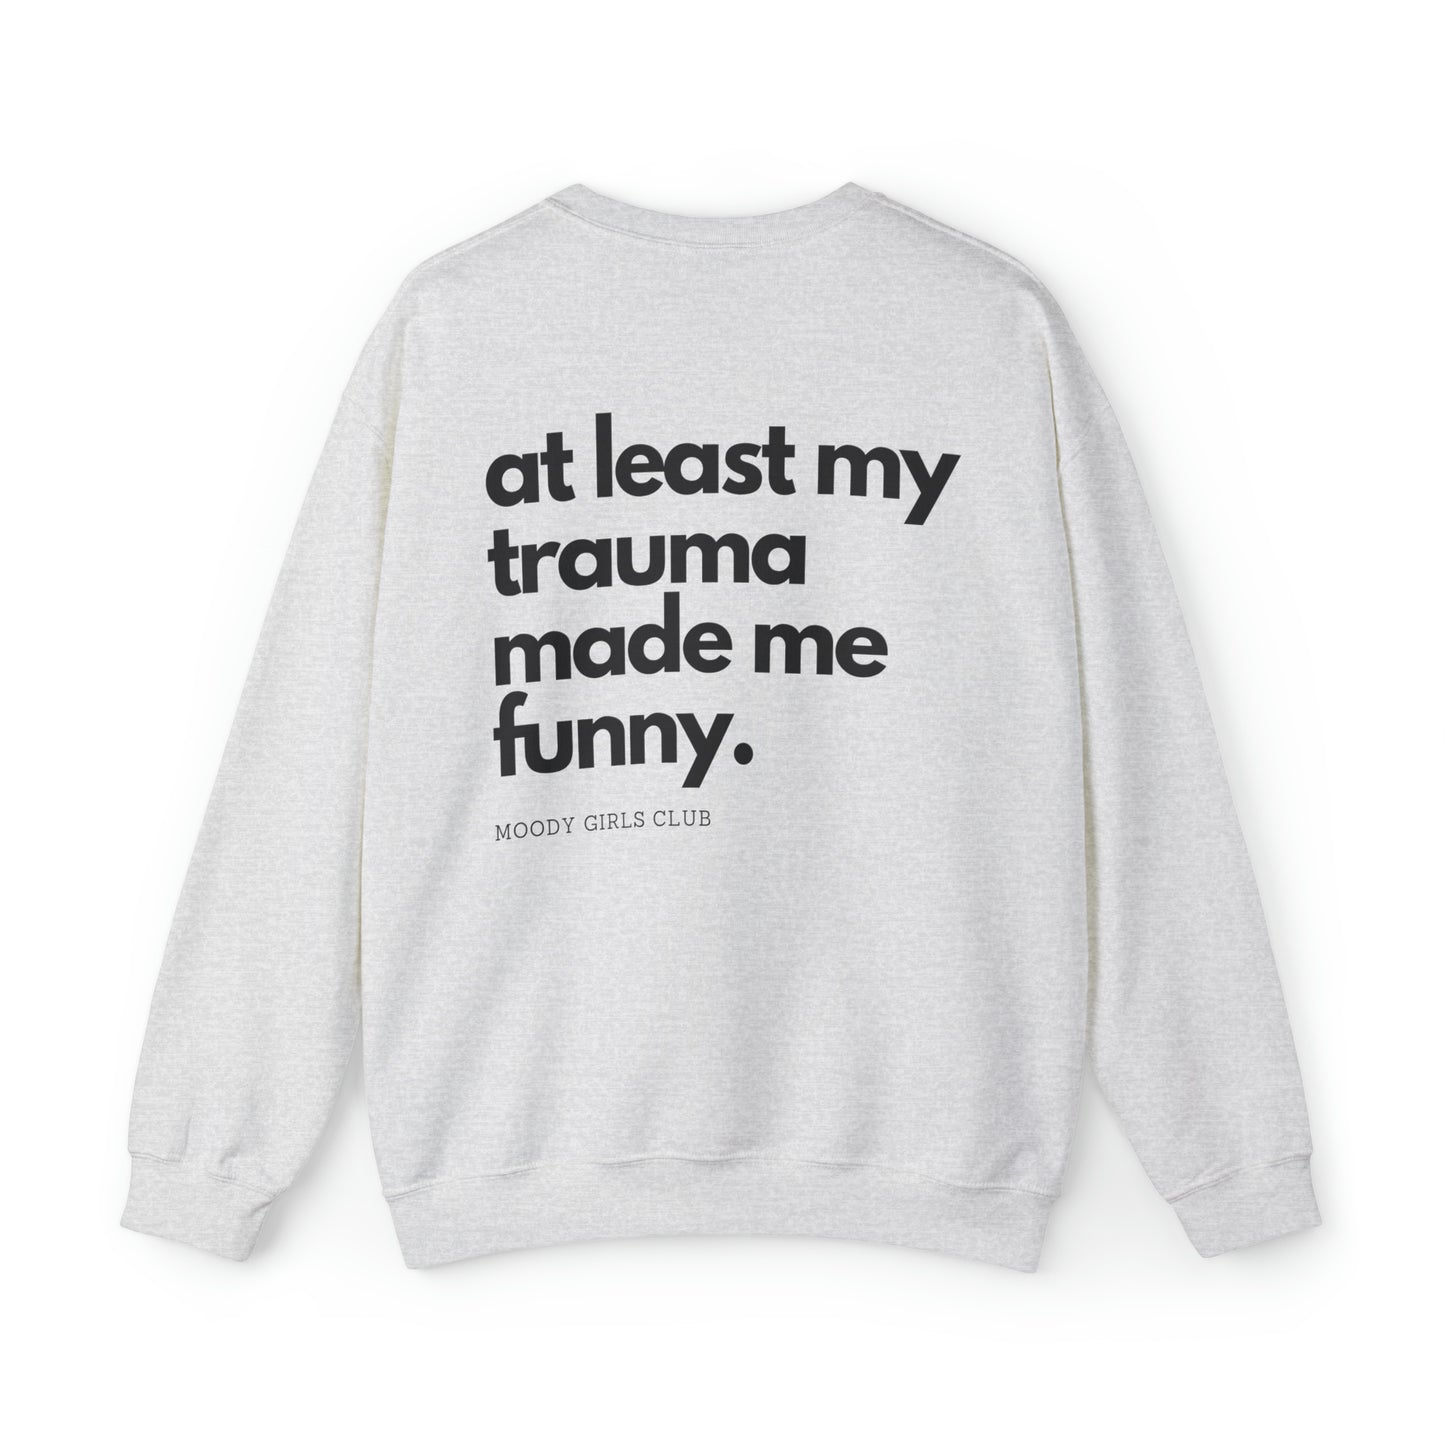 At Least My Trauma Made Me Funny Crewneck Sweatshirt